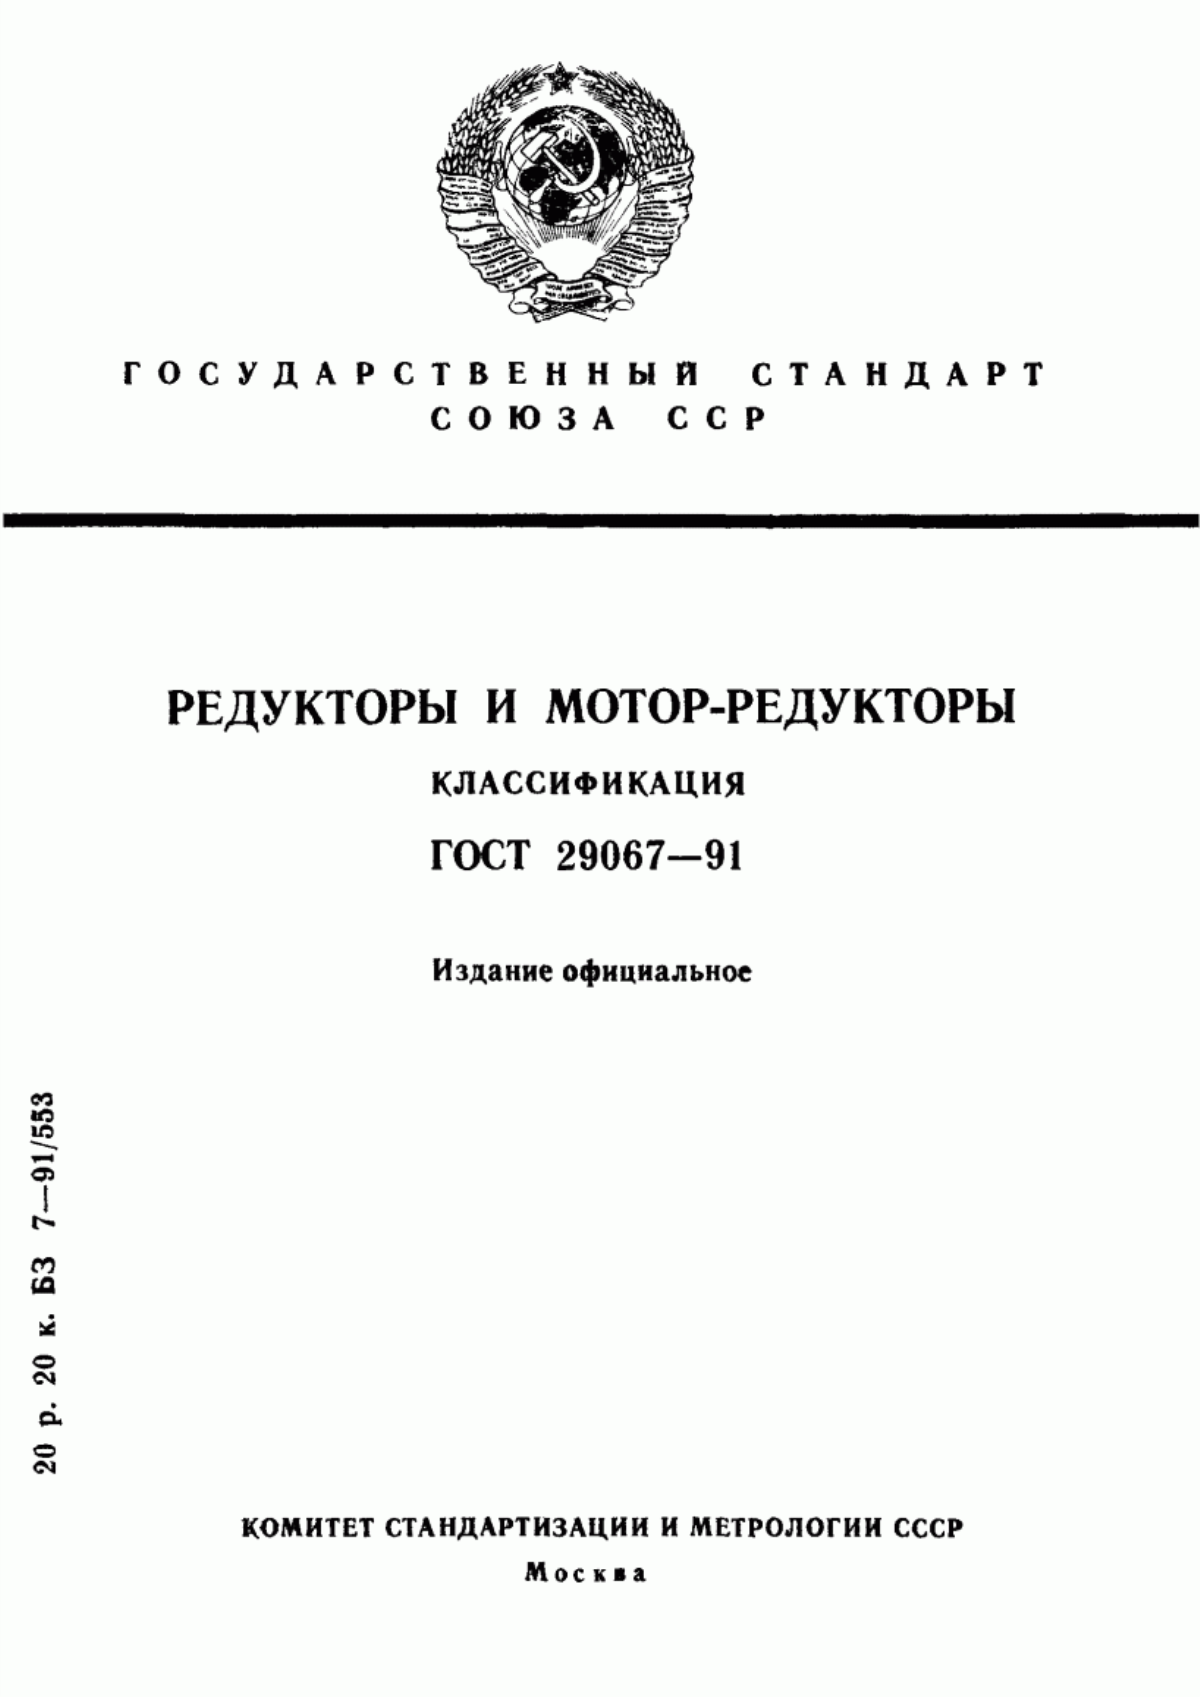 ГОСТ 29067-91 Редукторы и мотор-редукторы. Классификация